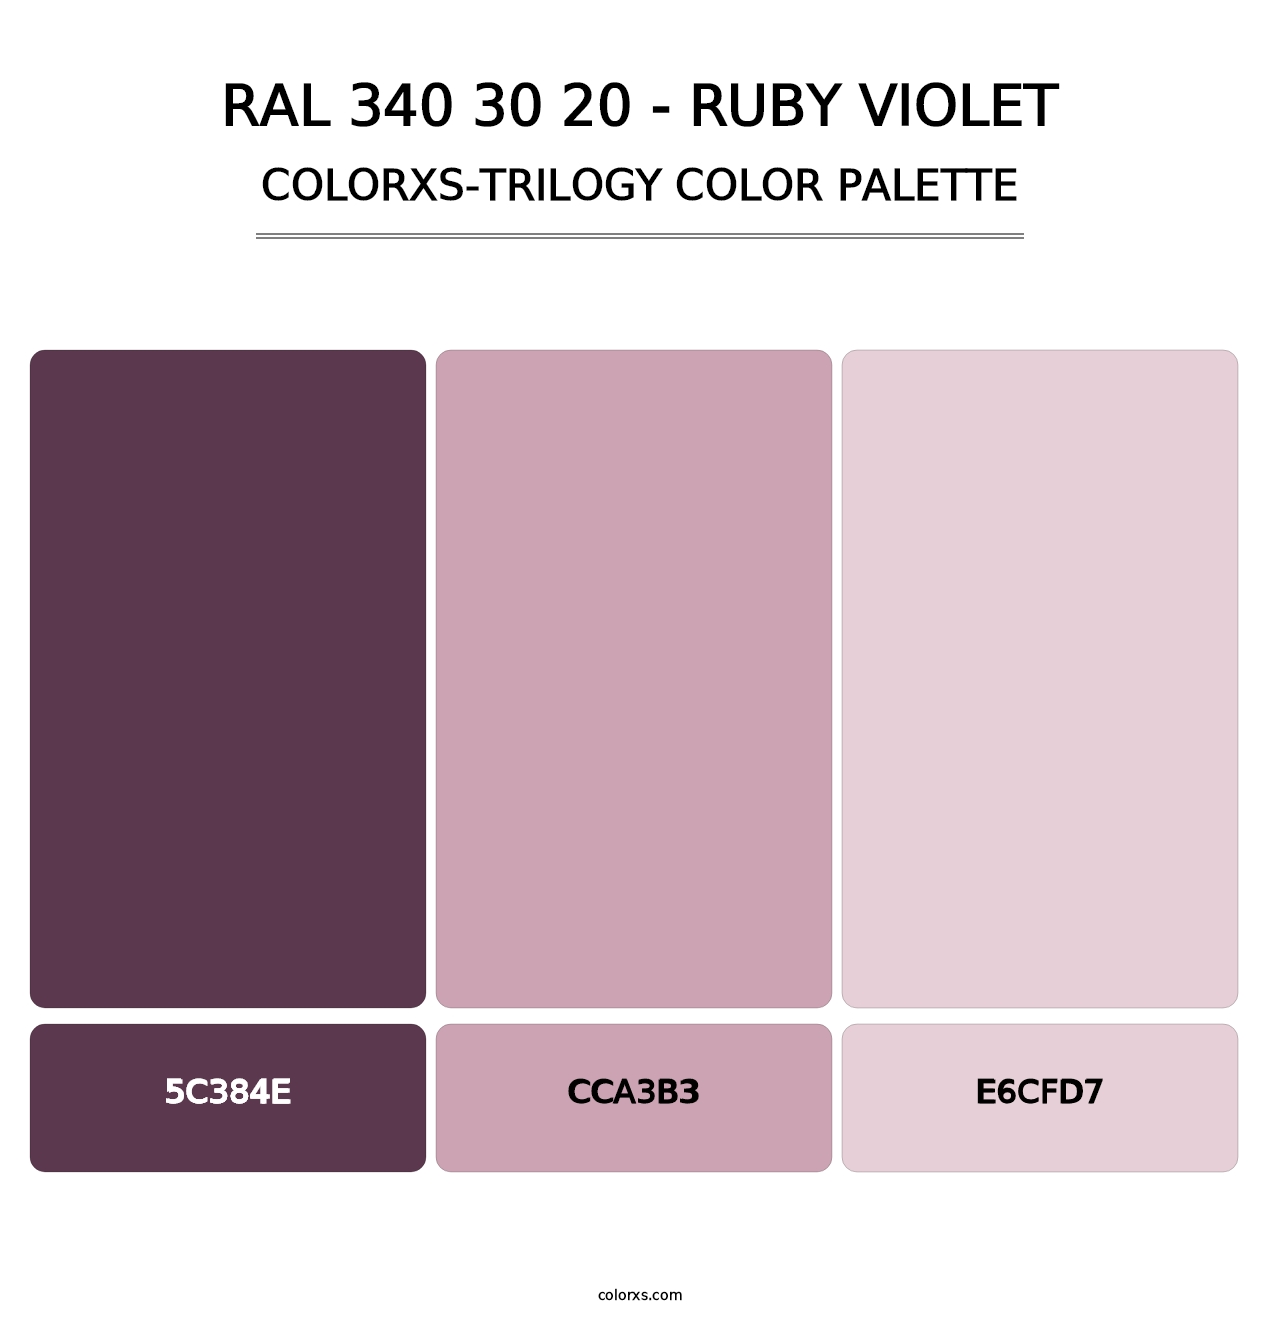 RAL 340 30 20 - Ruby Violet - Colorxs Trilogy Palette